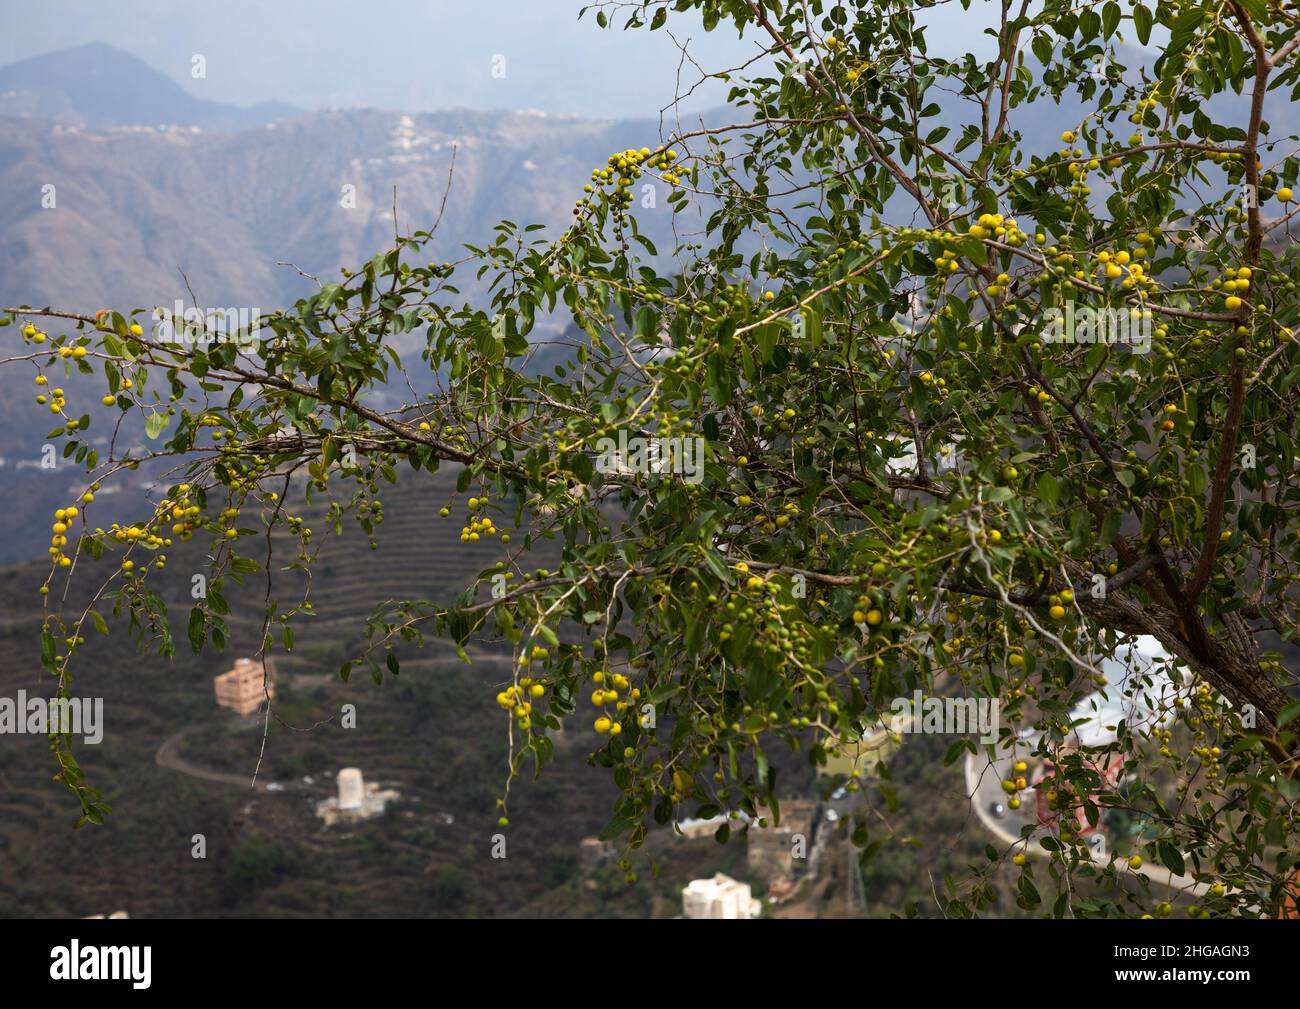 Sidr-Baum gelbe Früchte, Provinz Jizan, Faifa-Gebirge, Saudi-Arabien  Stockfotografie - Alamy